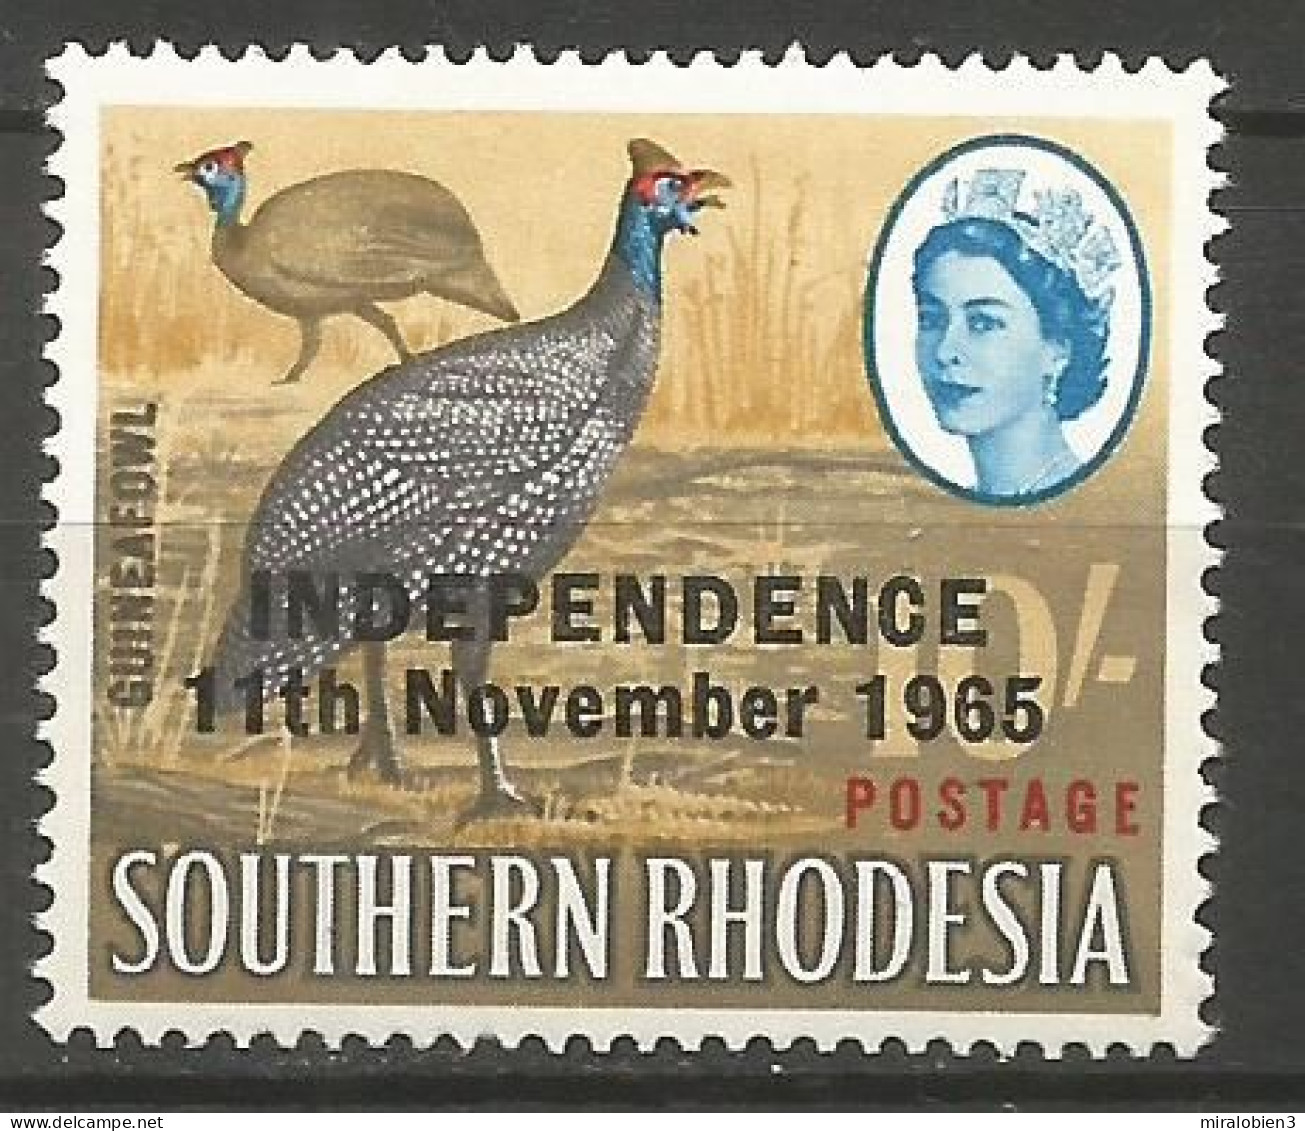 RODESIA YVERT NUM. 127 ** NUEVO SIN FIJASELLOS - Rhodesien (1964-1980)